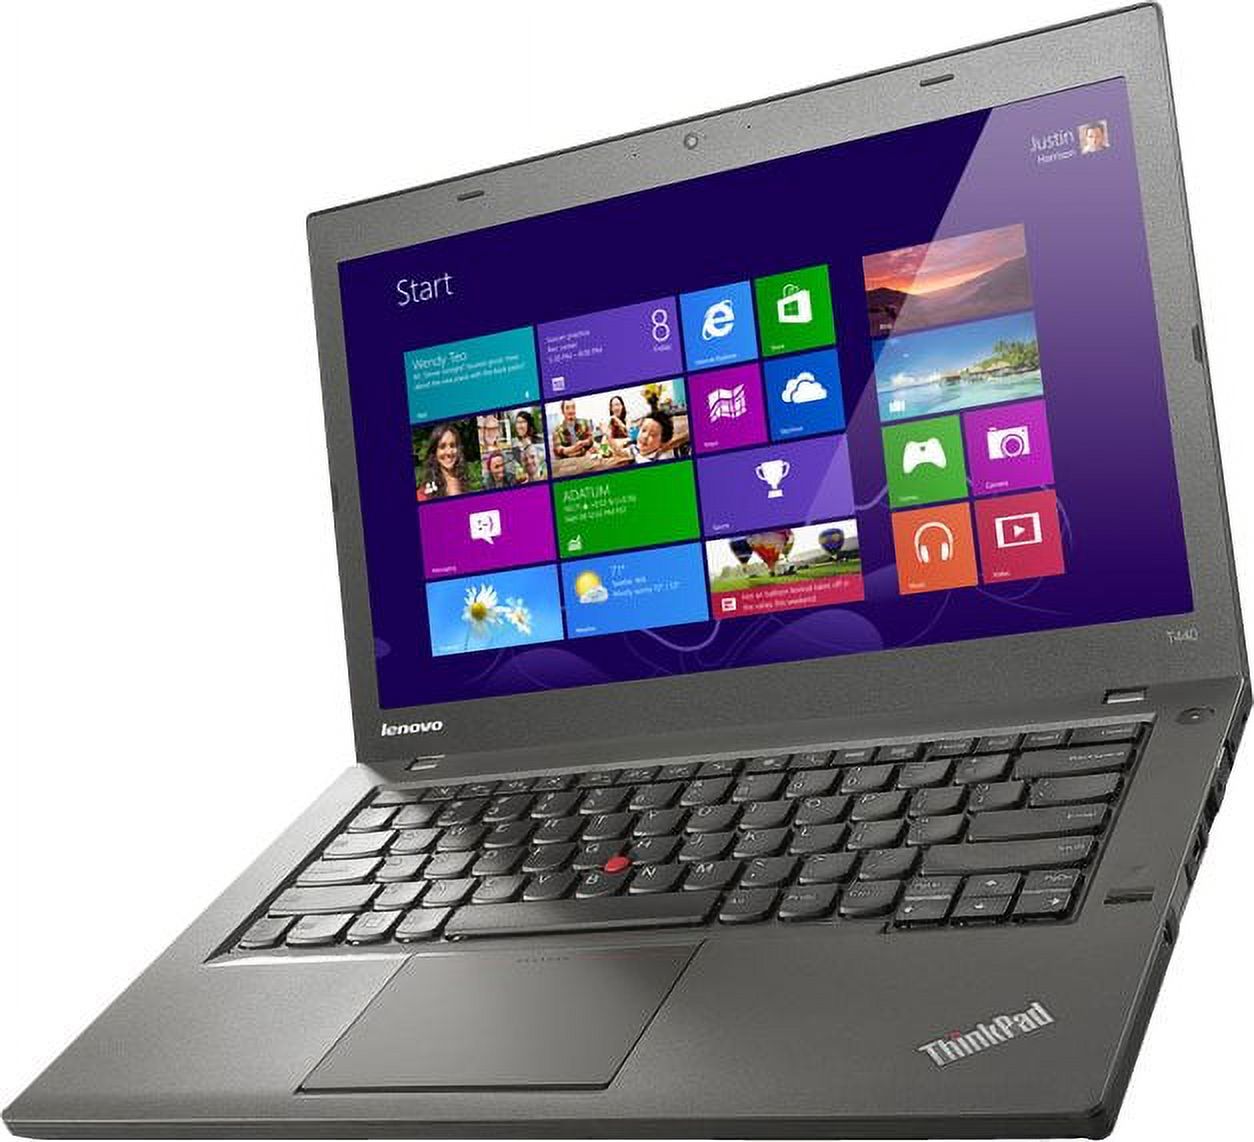 Used Lenovo Thinkpad T440 14" HD, i5-4200U 1.6GHz, 8GB RAM, 500GB 7200rpm Hard Drive, Windows 10 Pro 64 - image 1 of 15